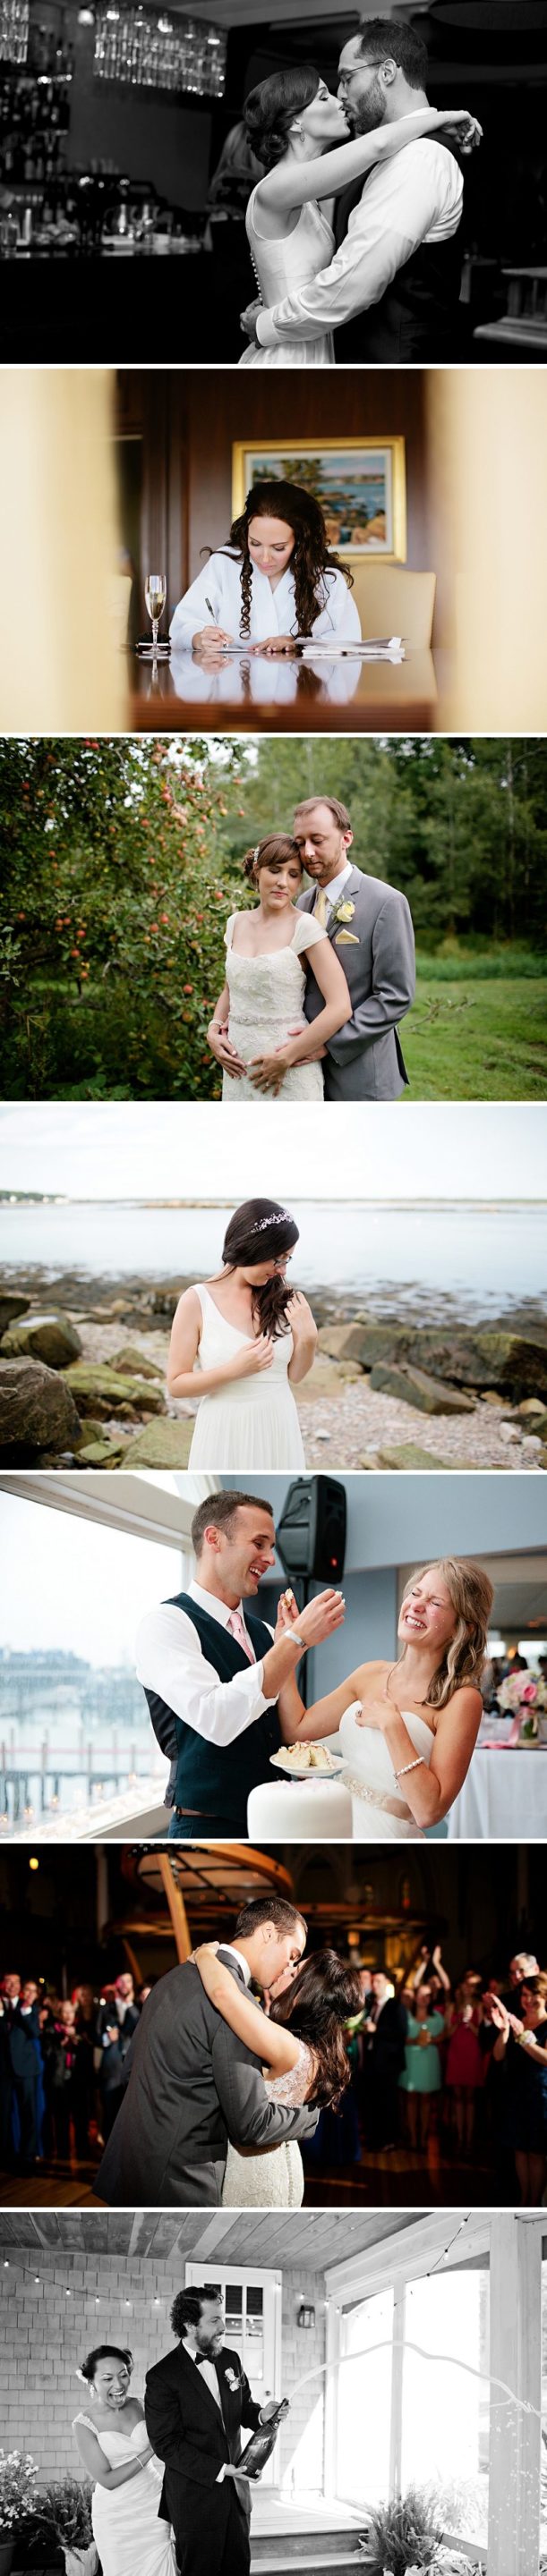 Maine-wedding-photographer-best-wedding-photos-of-2014-0017